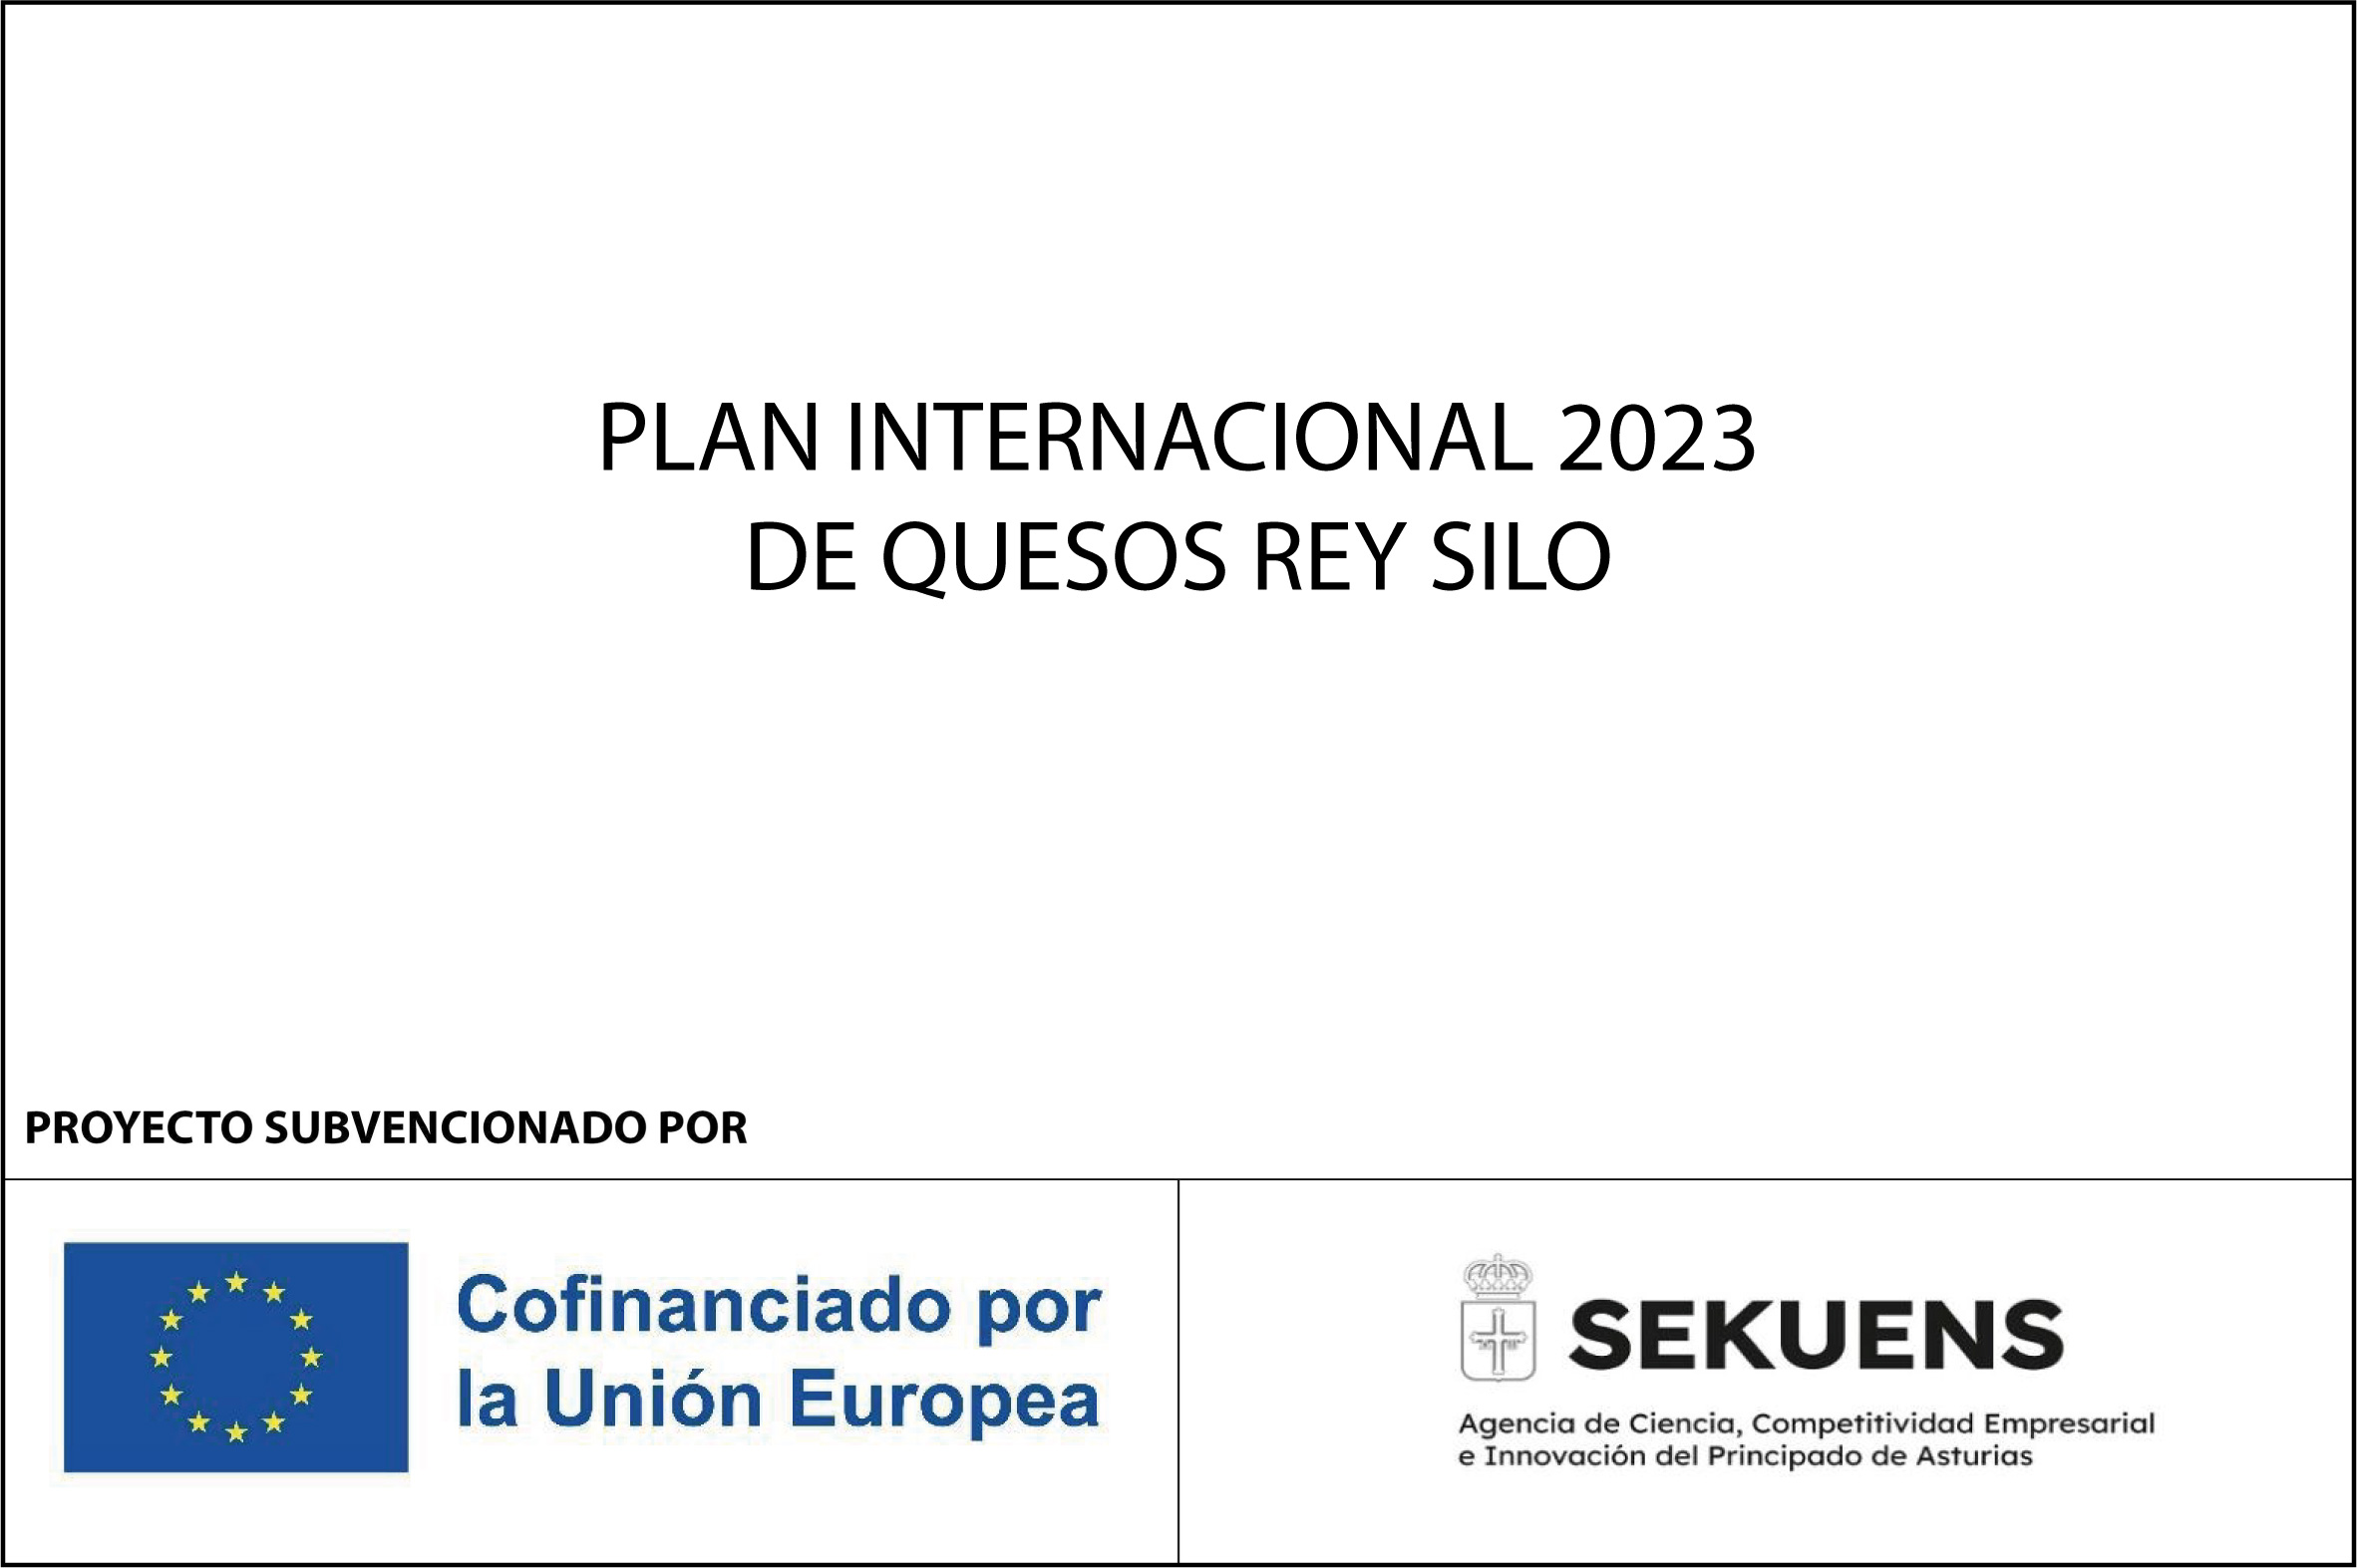 Plan Internacional 2023 de Quesos Rey Silo